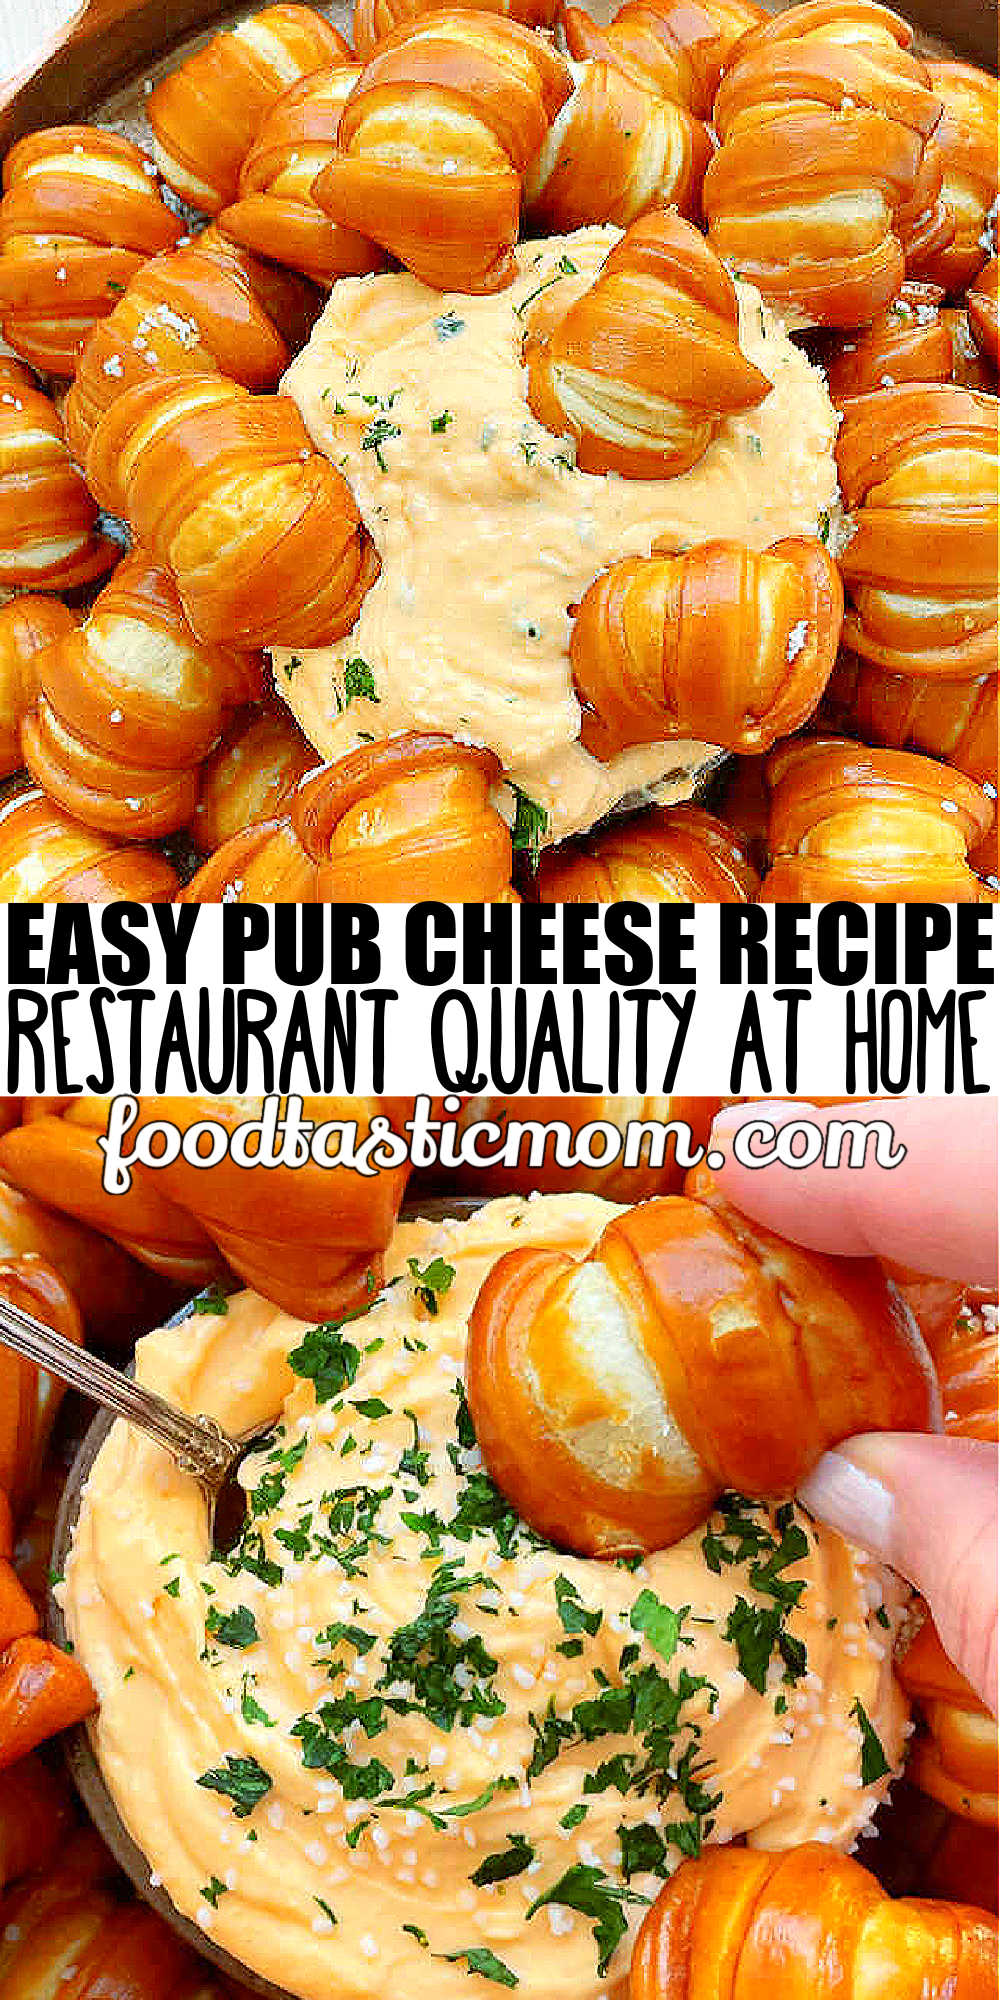 Pub Cheese Recipe | Foodtastic Mom #pubcheeserecipe #pubcheese #appetizerrecipes #cheesedip via @foodtasticmom